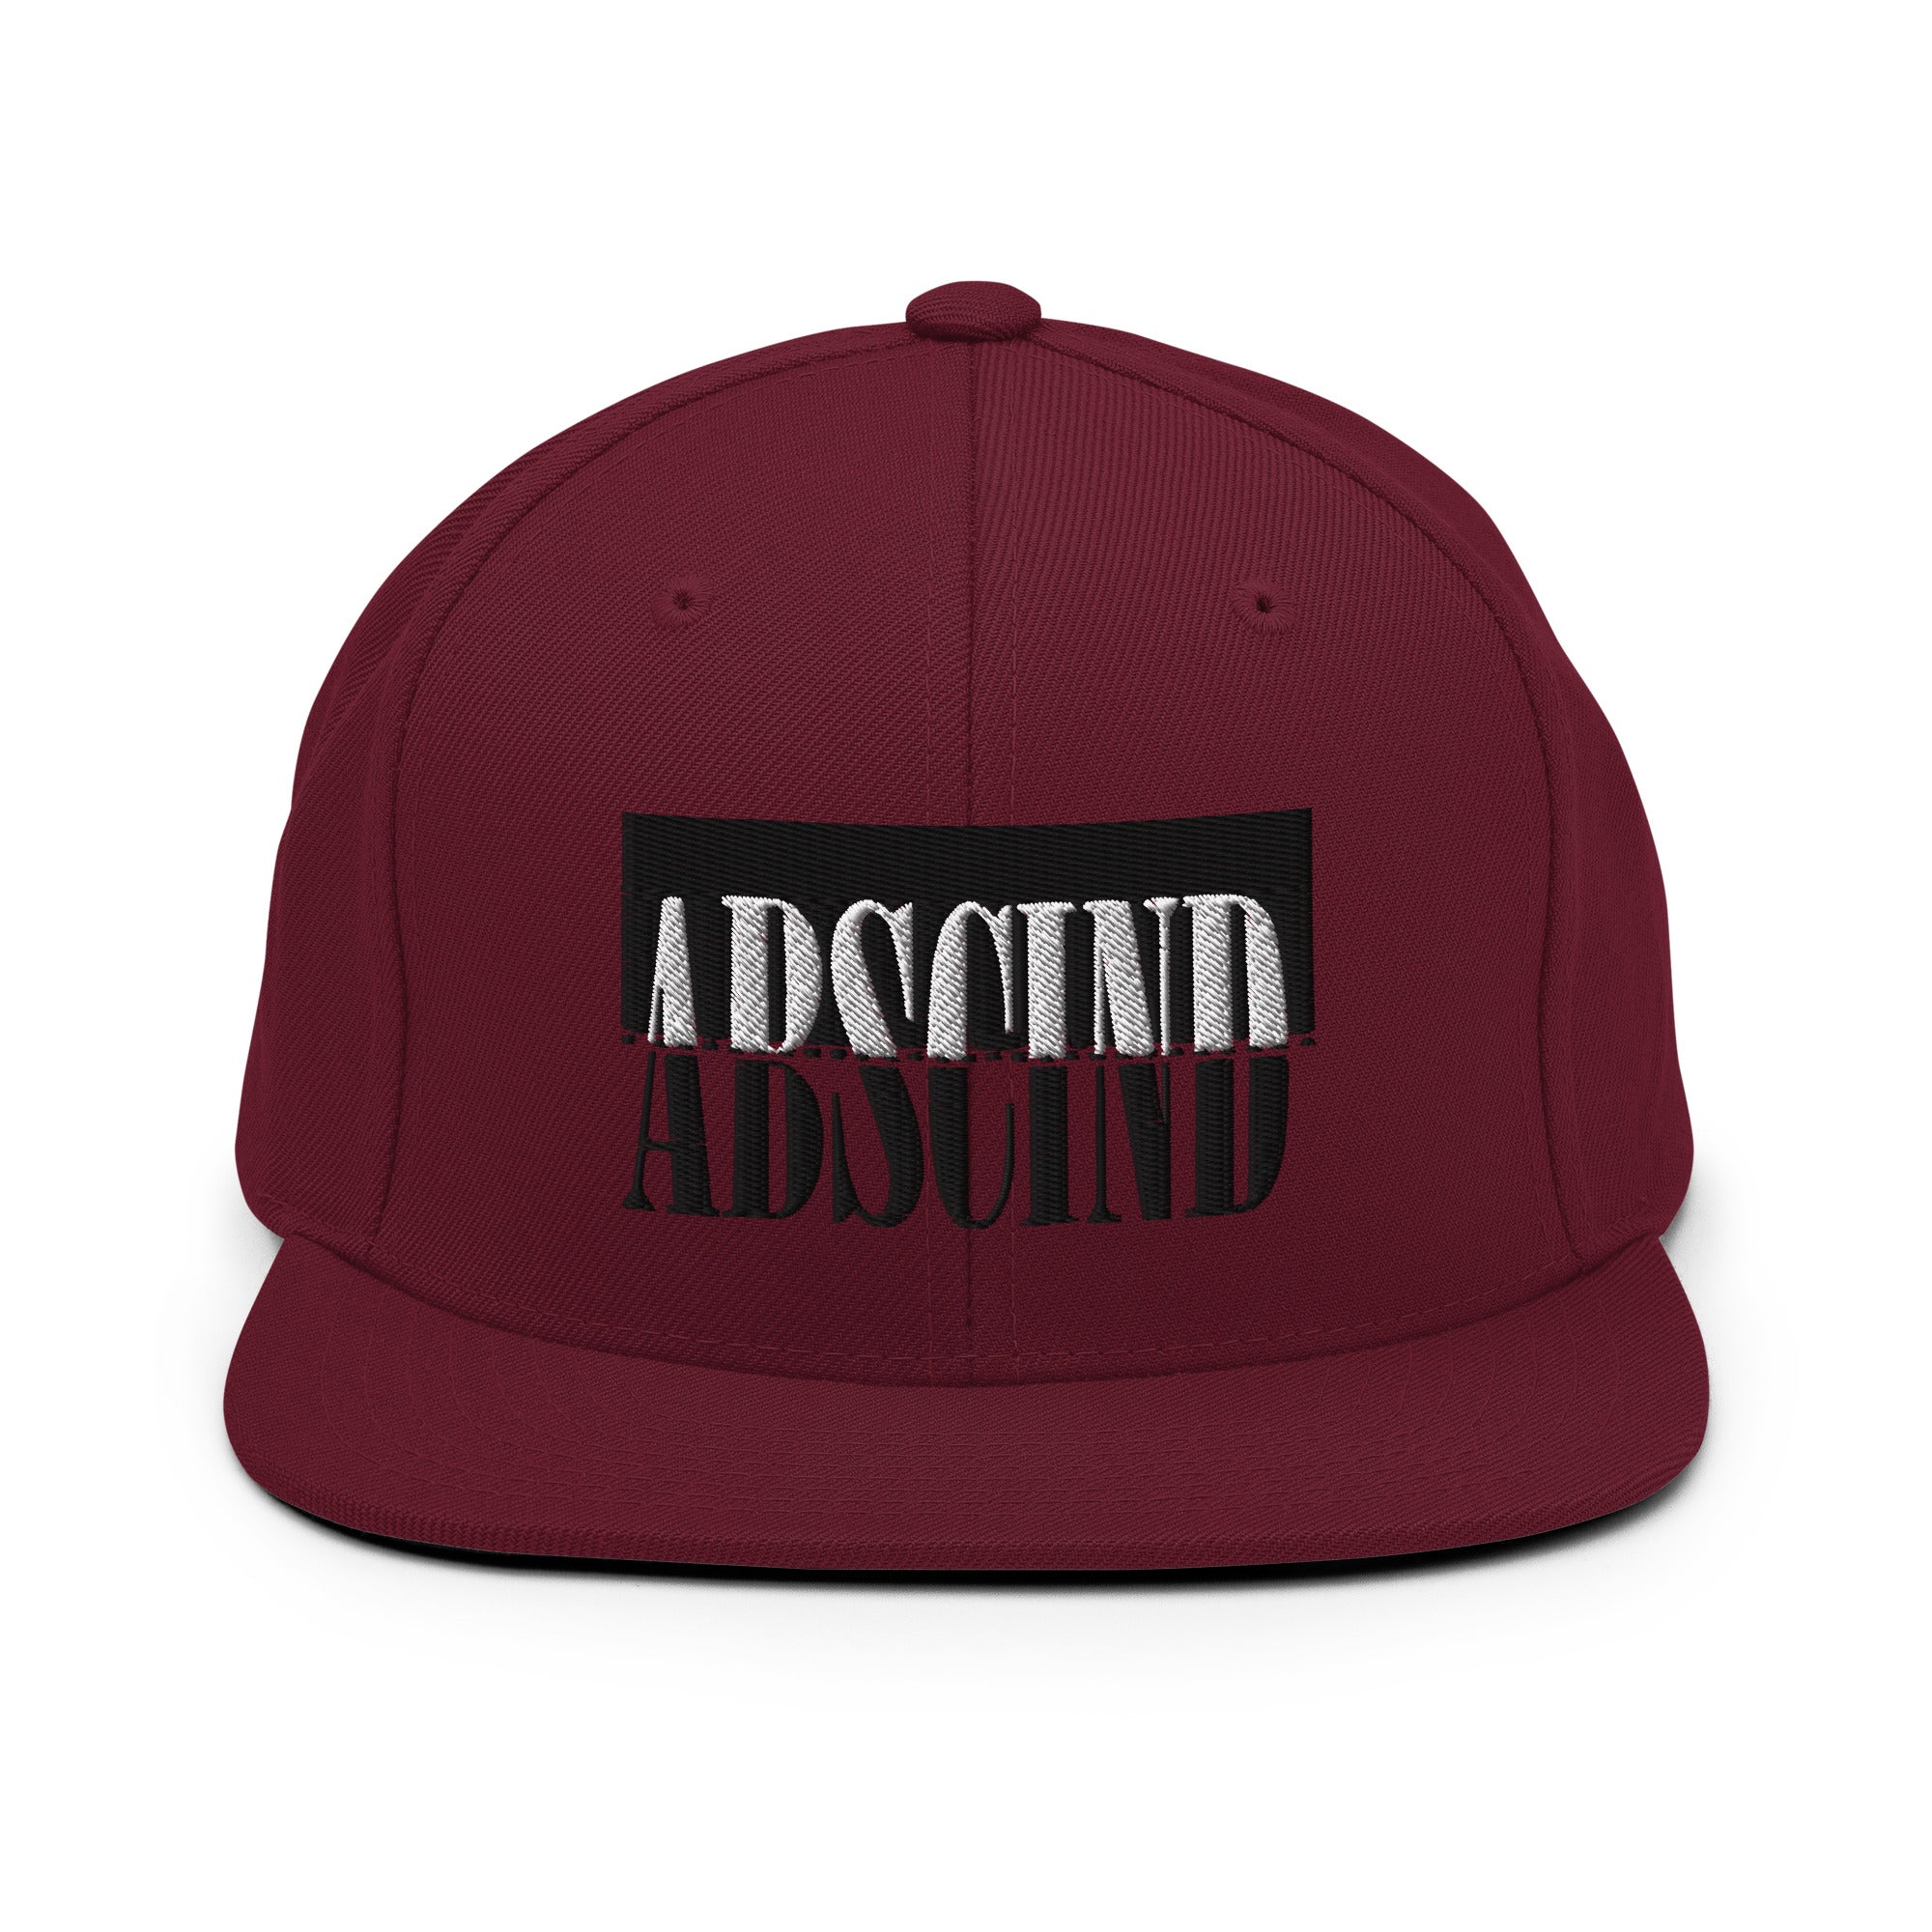 Abscind Snapback Hat